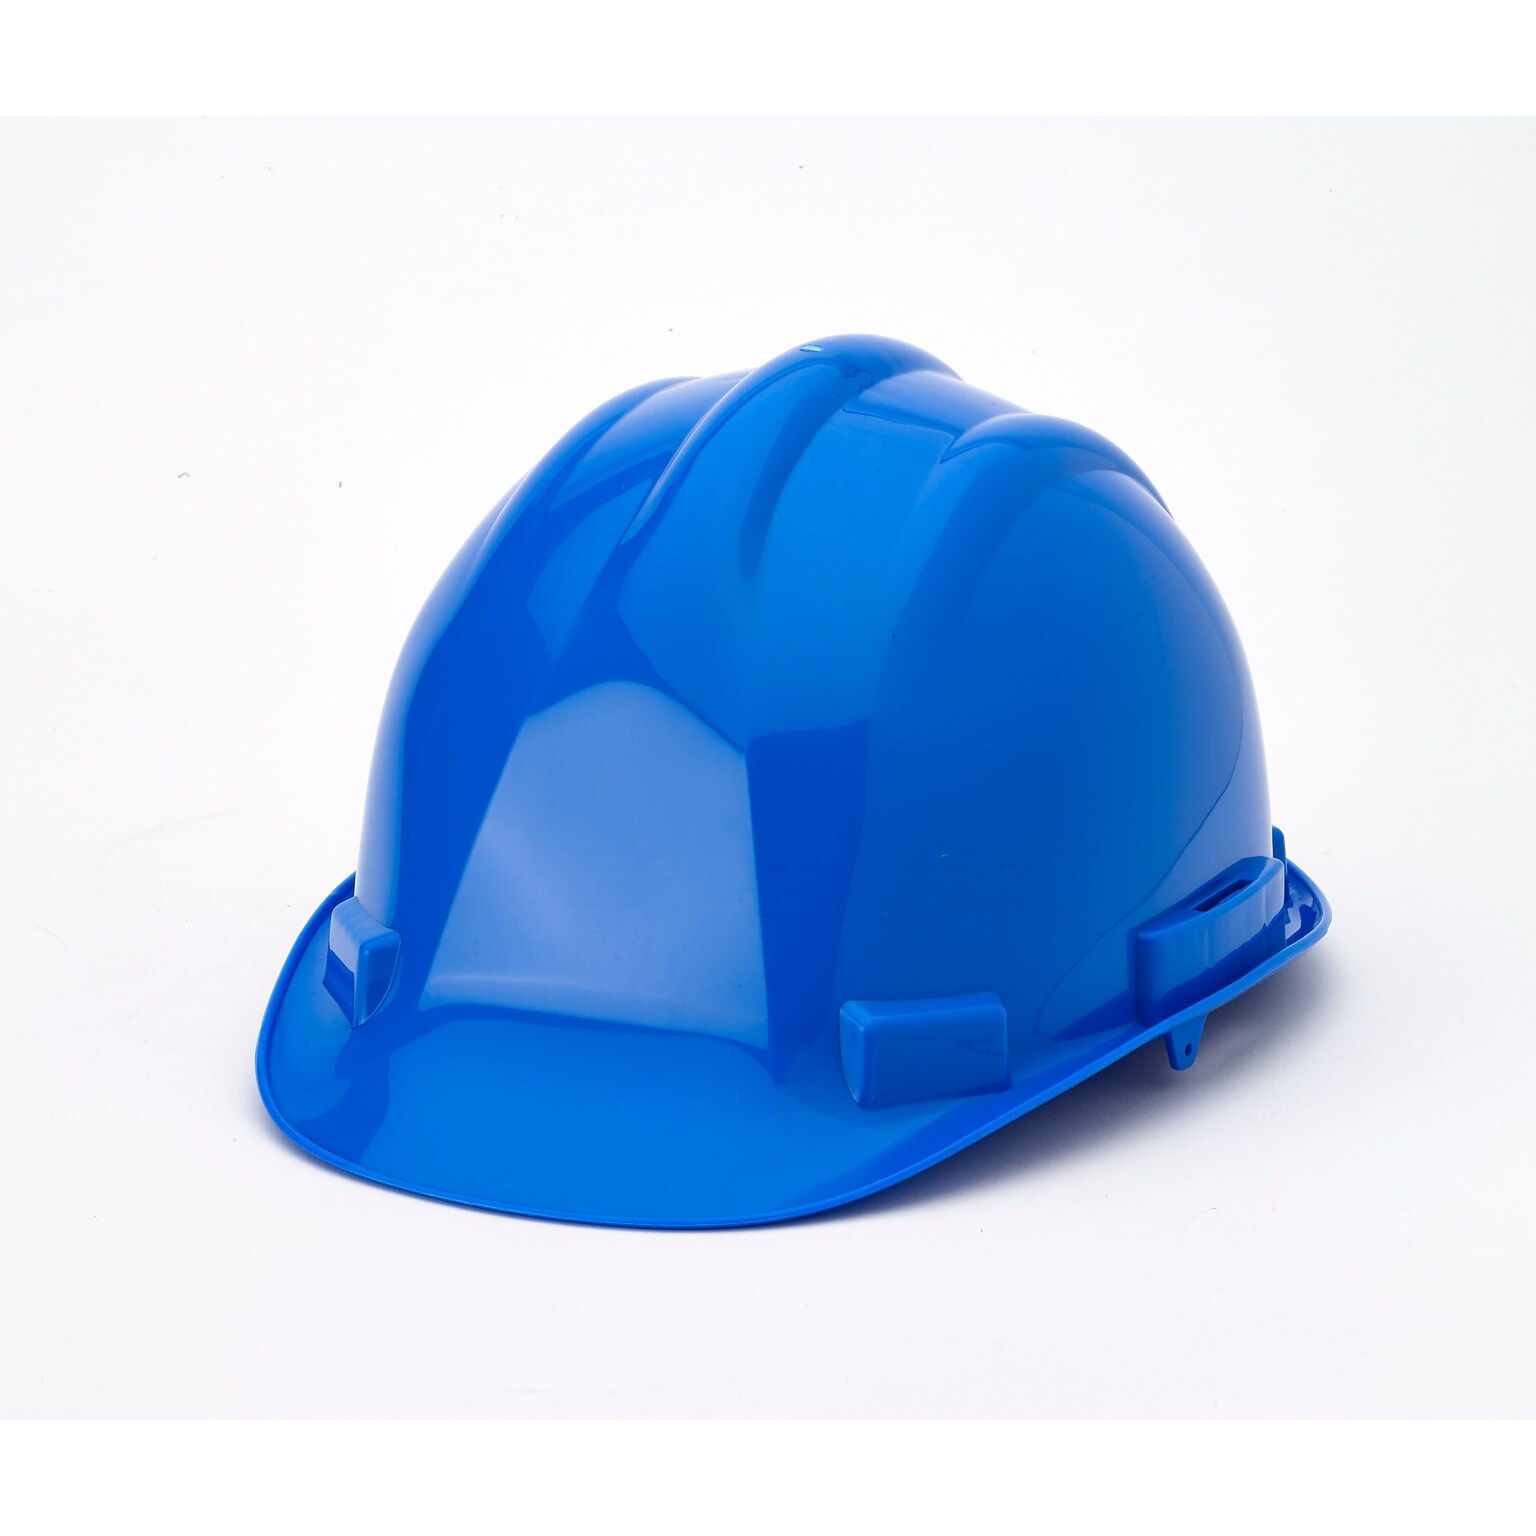 Mutual Industries 6-Point Ratchet Suspension Short Brim Hard Hat, Blue (50215-25)